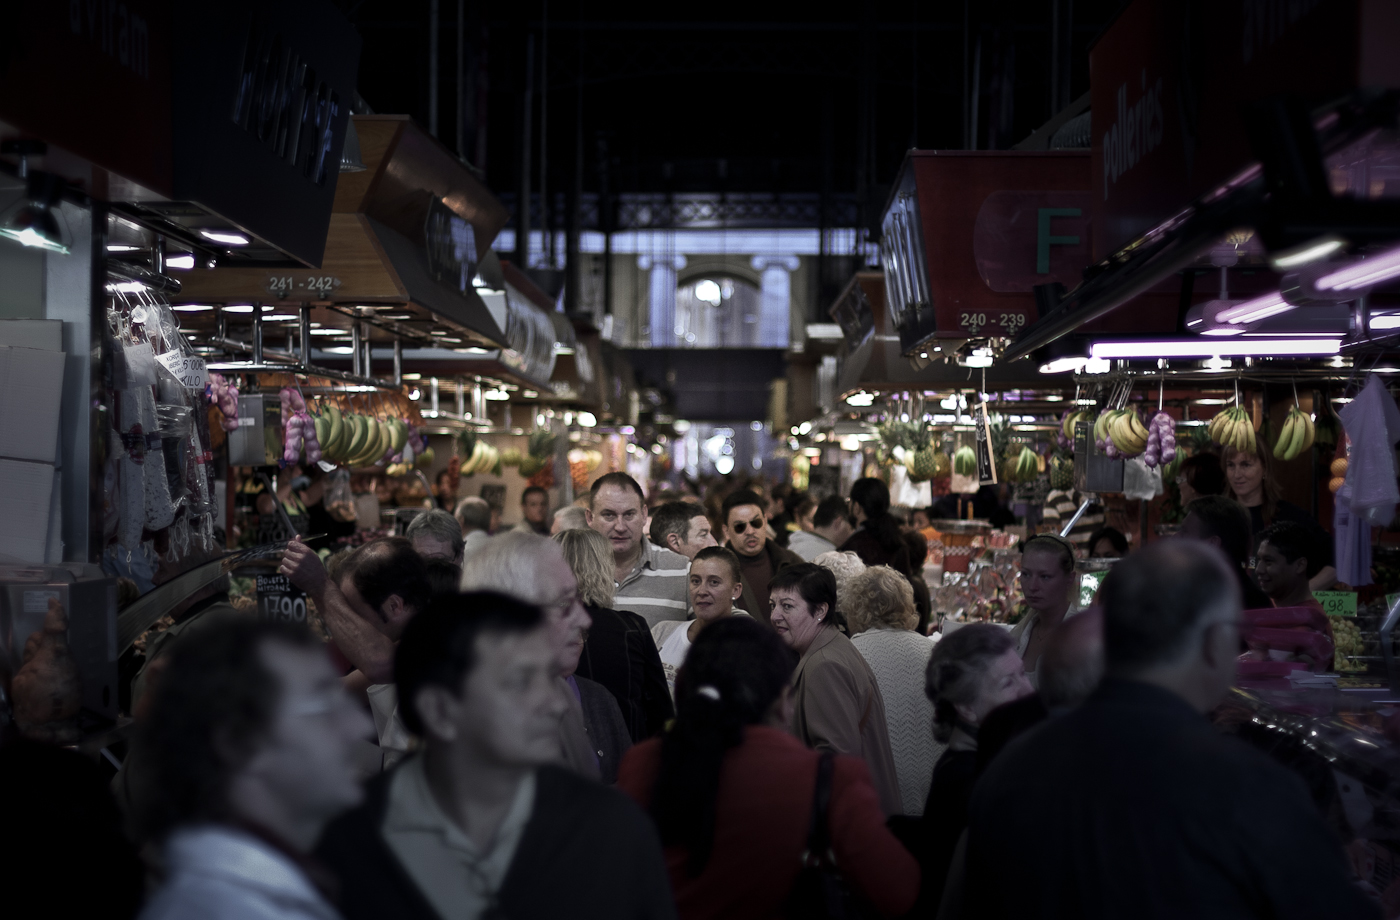 Scene At The Market